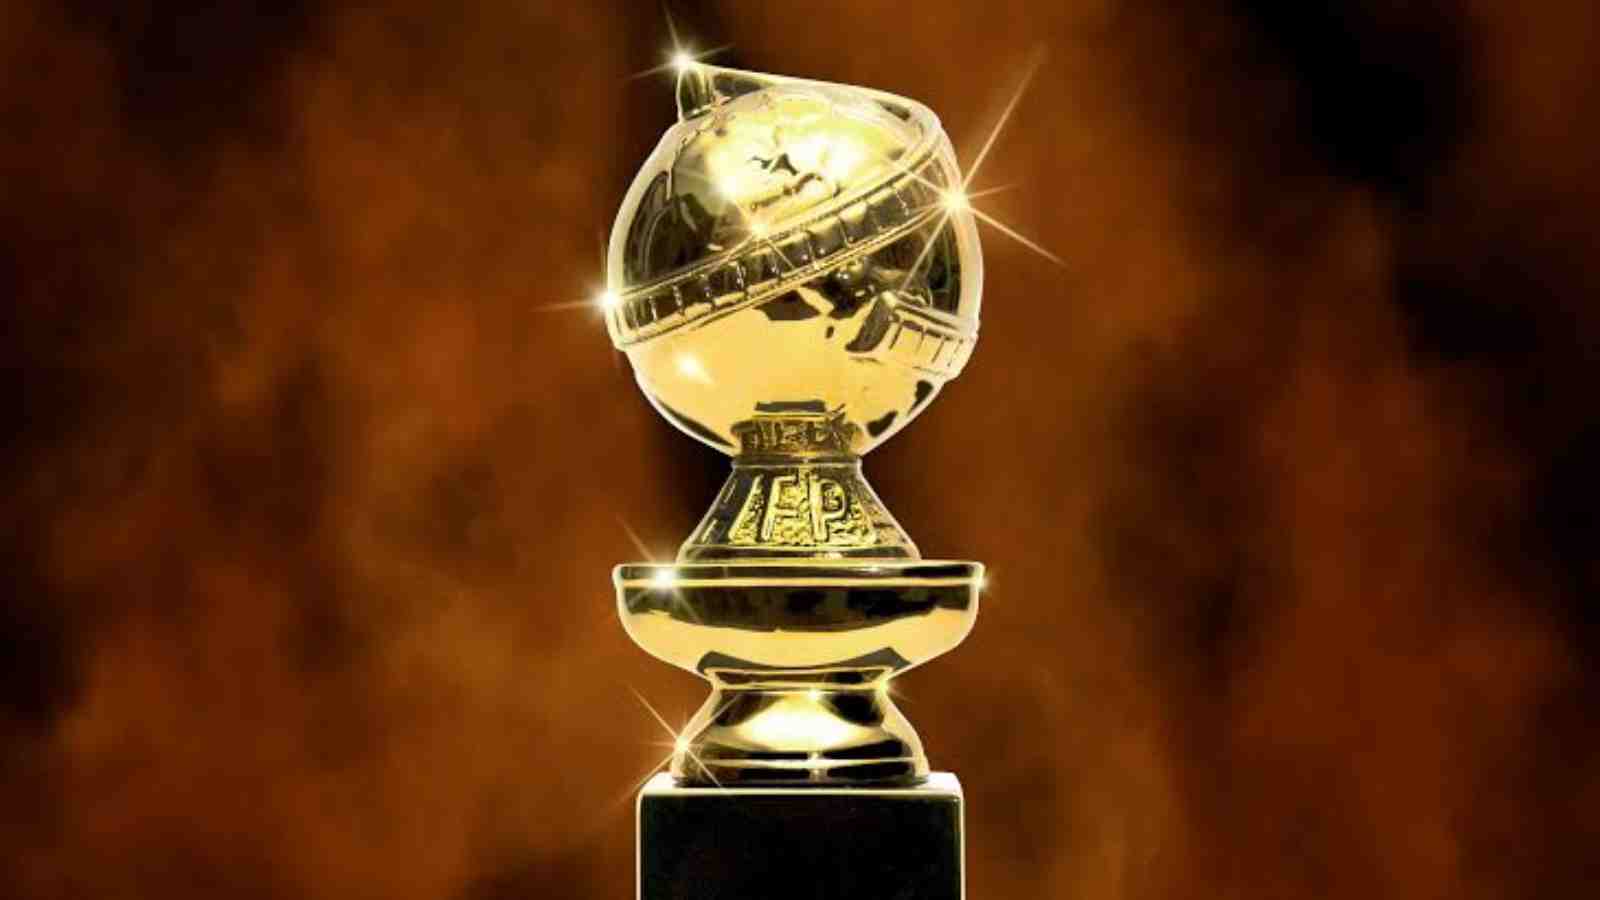 The Golden Globe trophy